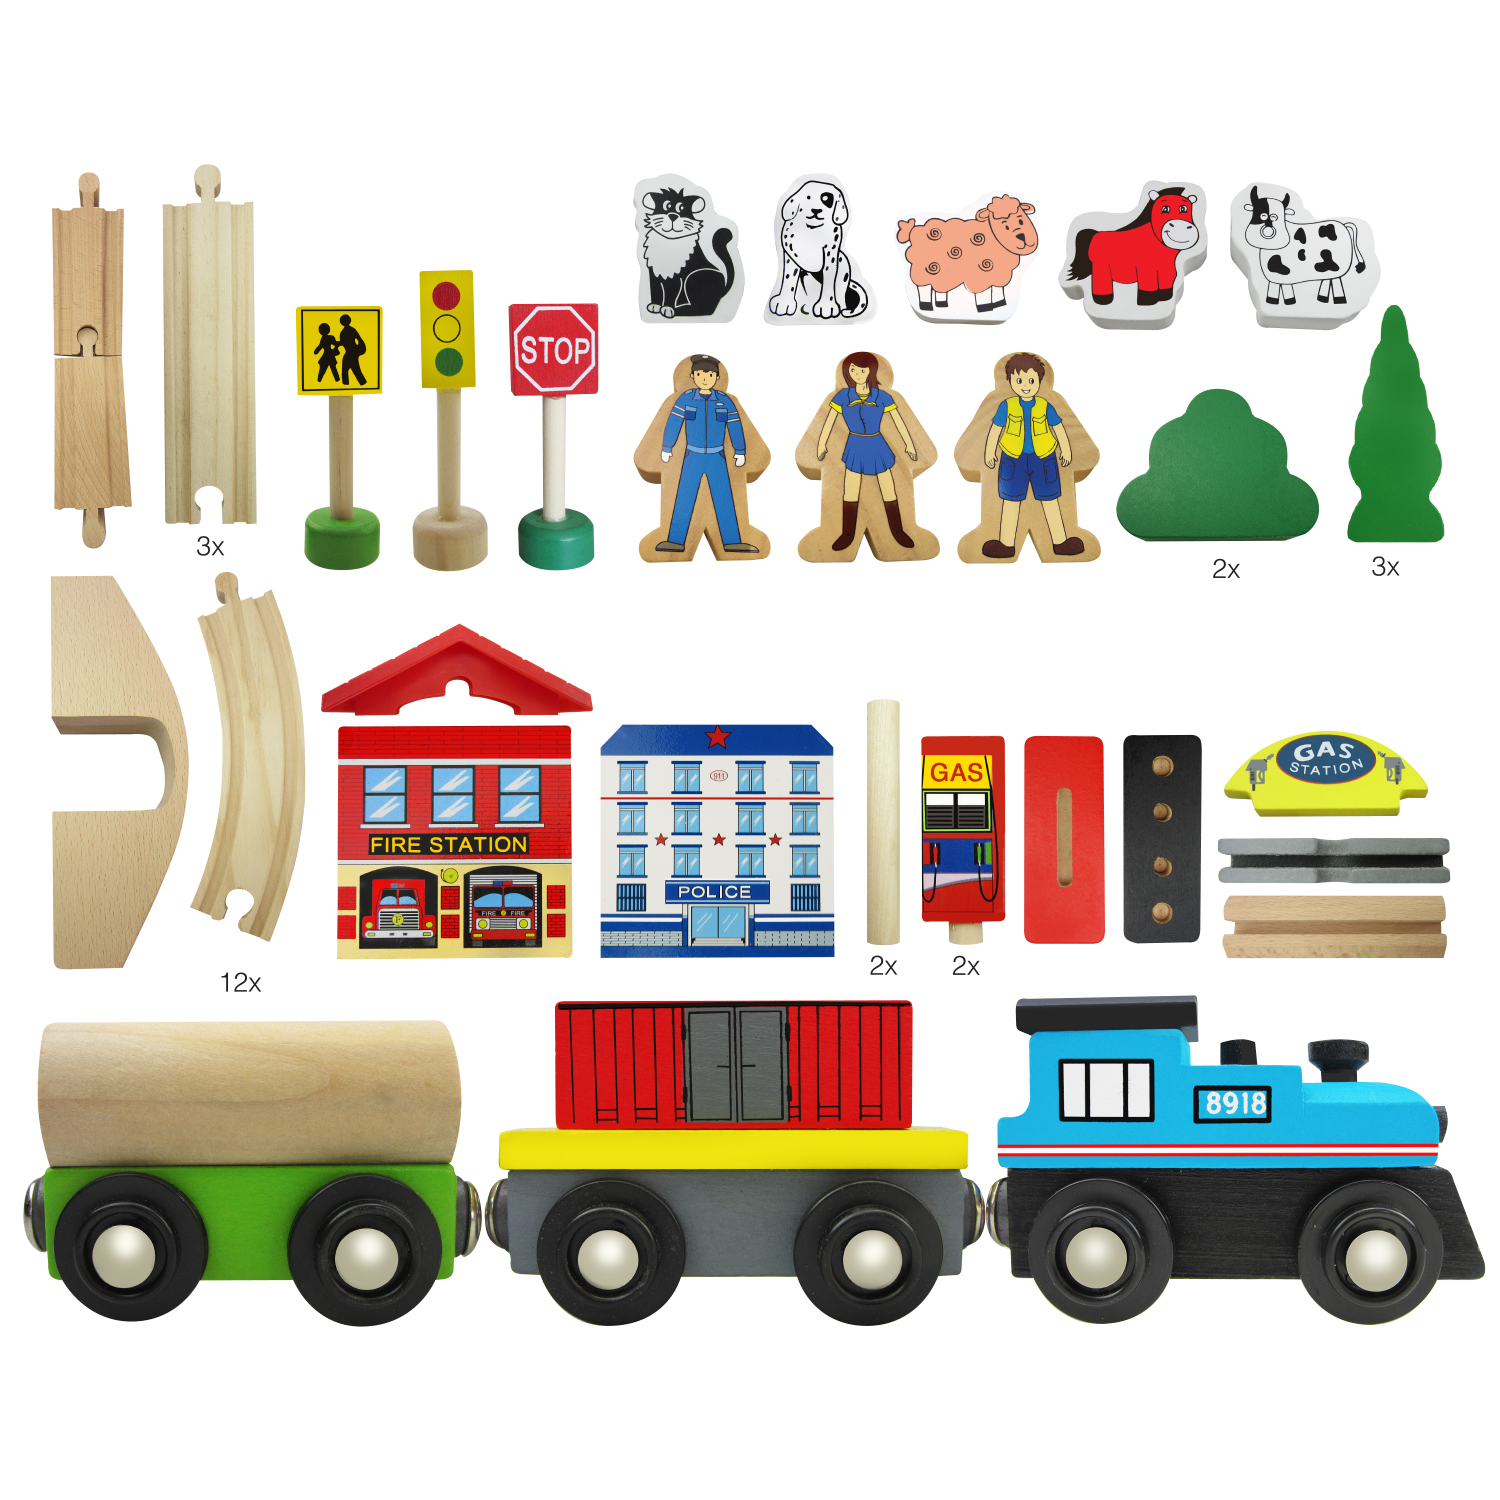 RGS wooden train set contains 50 pieces